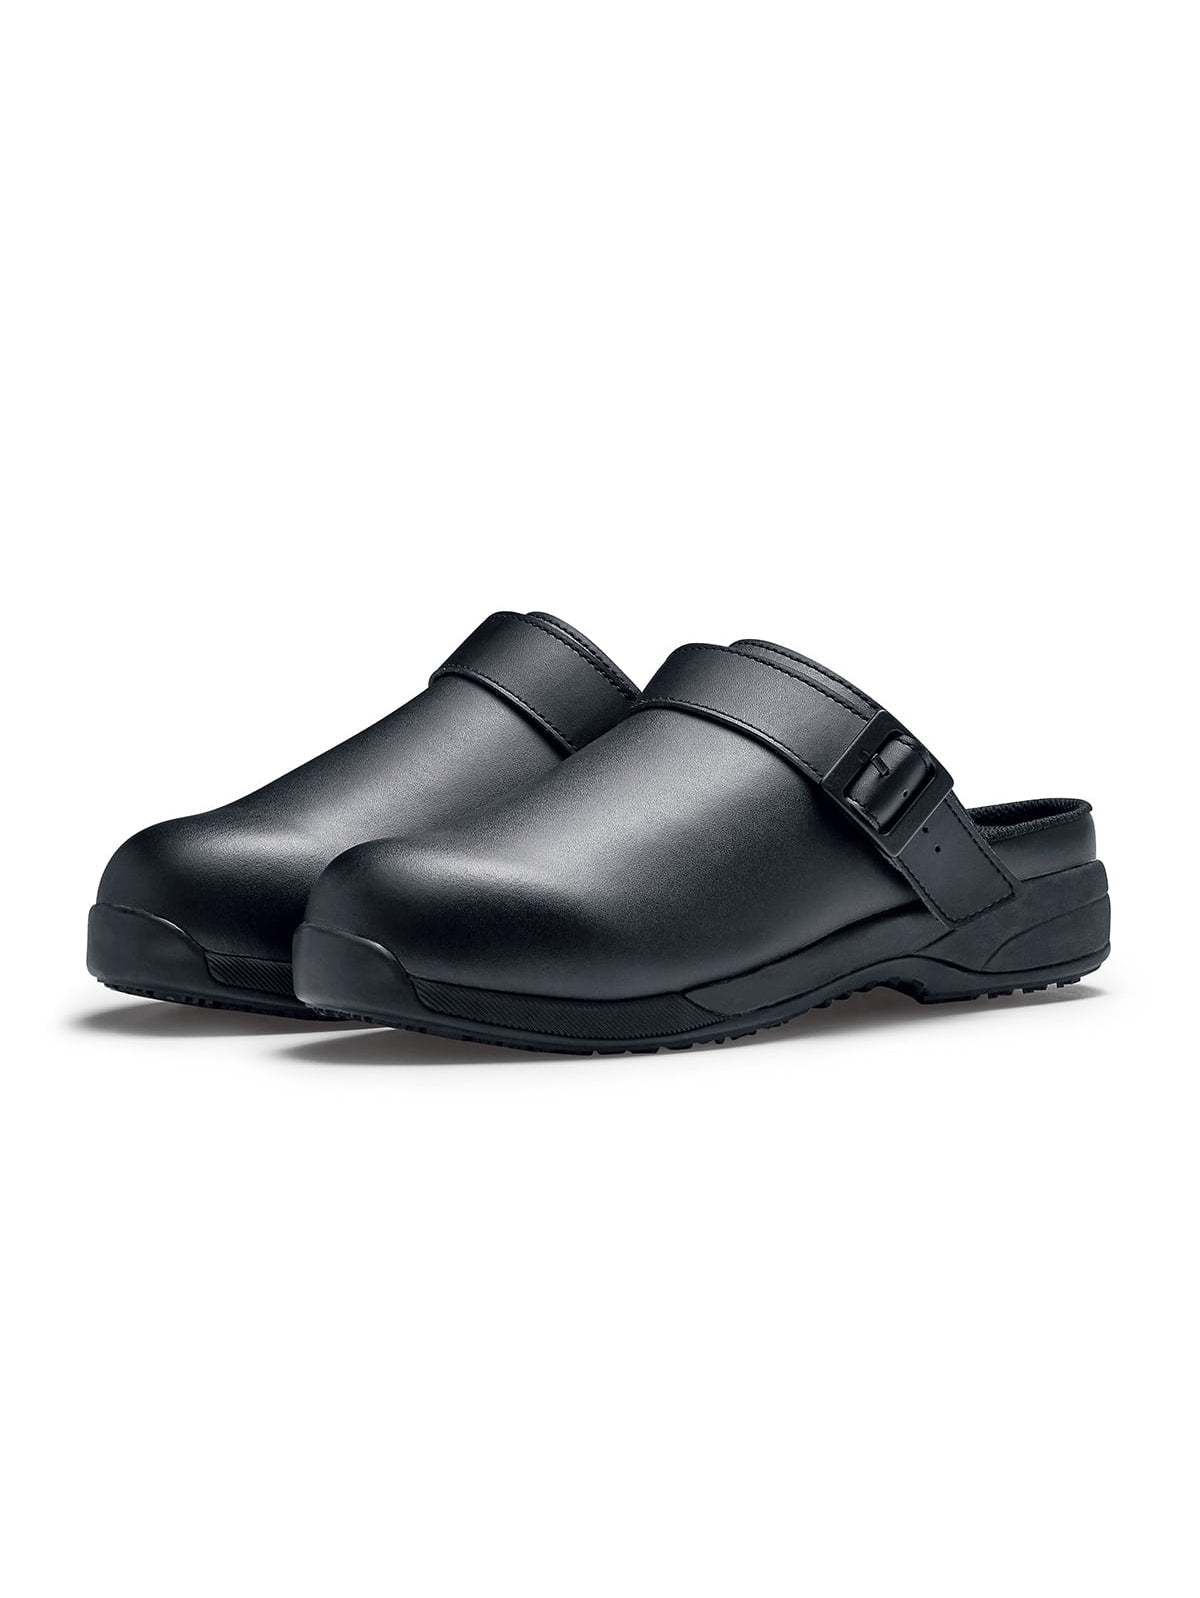 Unisex Work Shoe Triston II SB Black by Shoes For Crews -  ChefsCotton